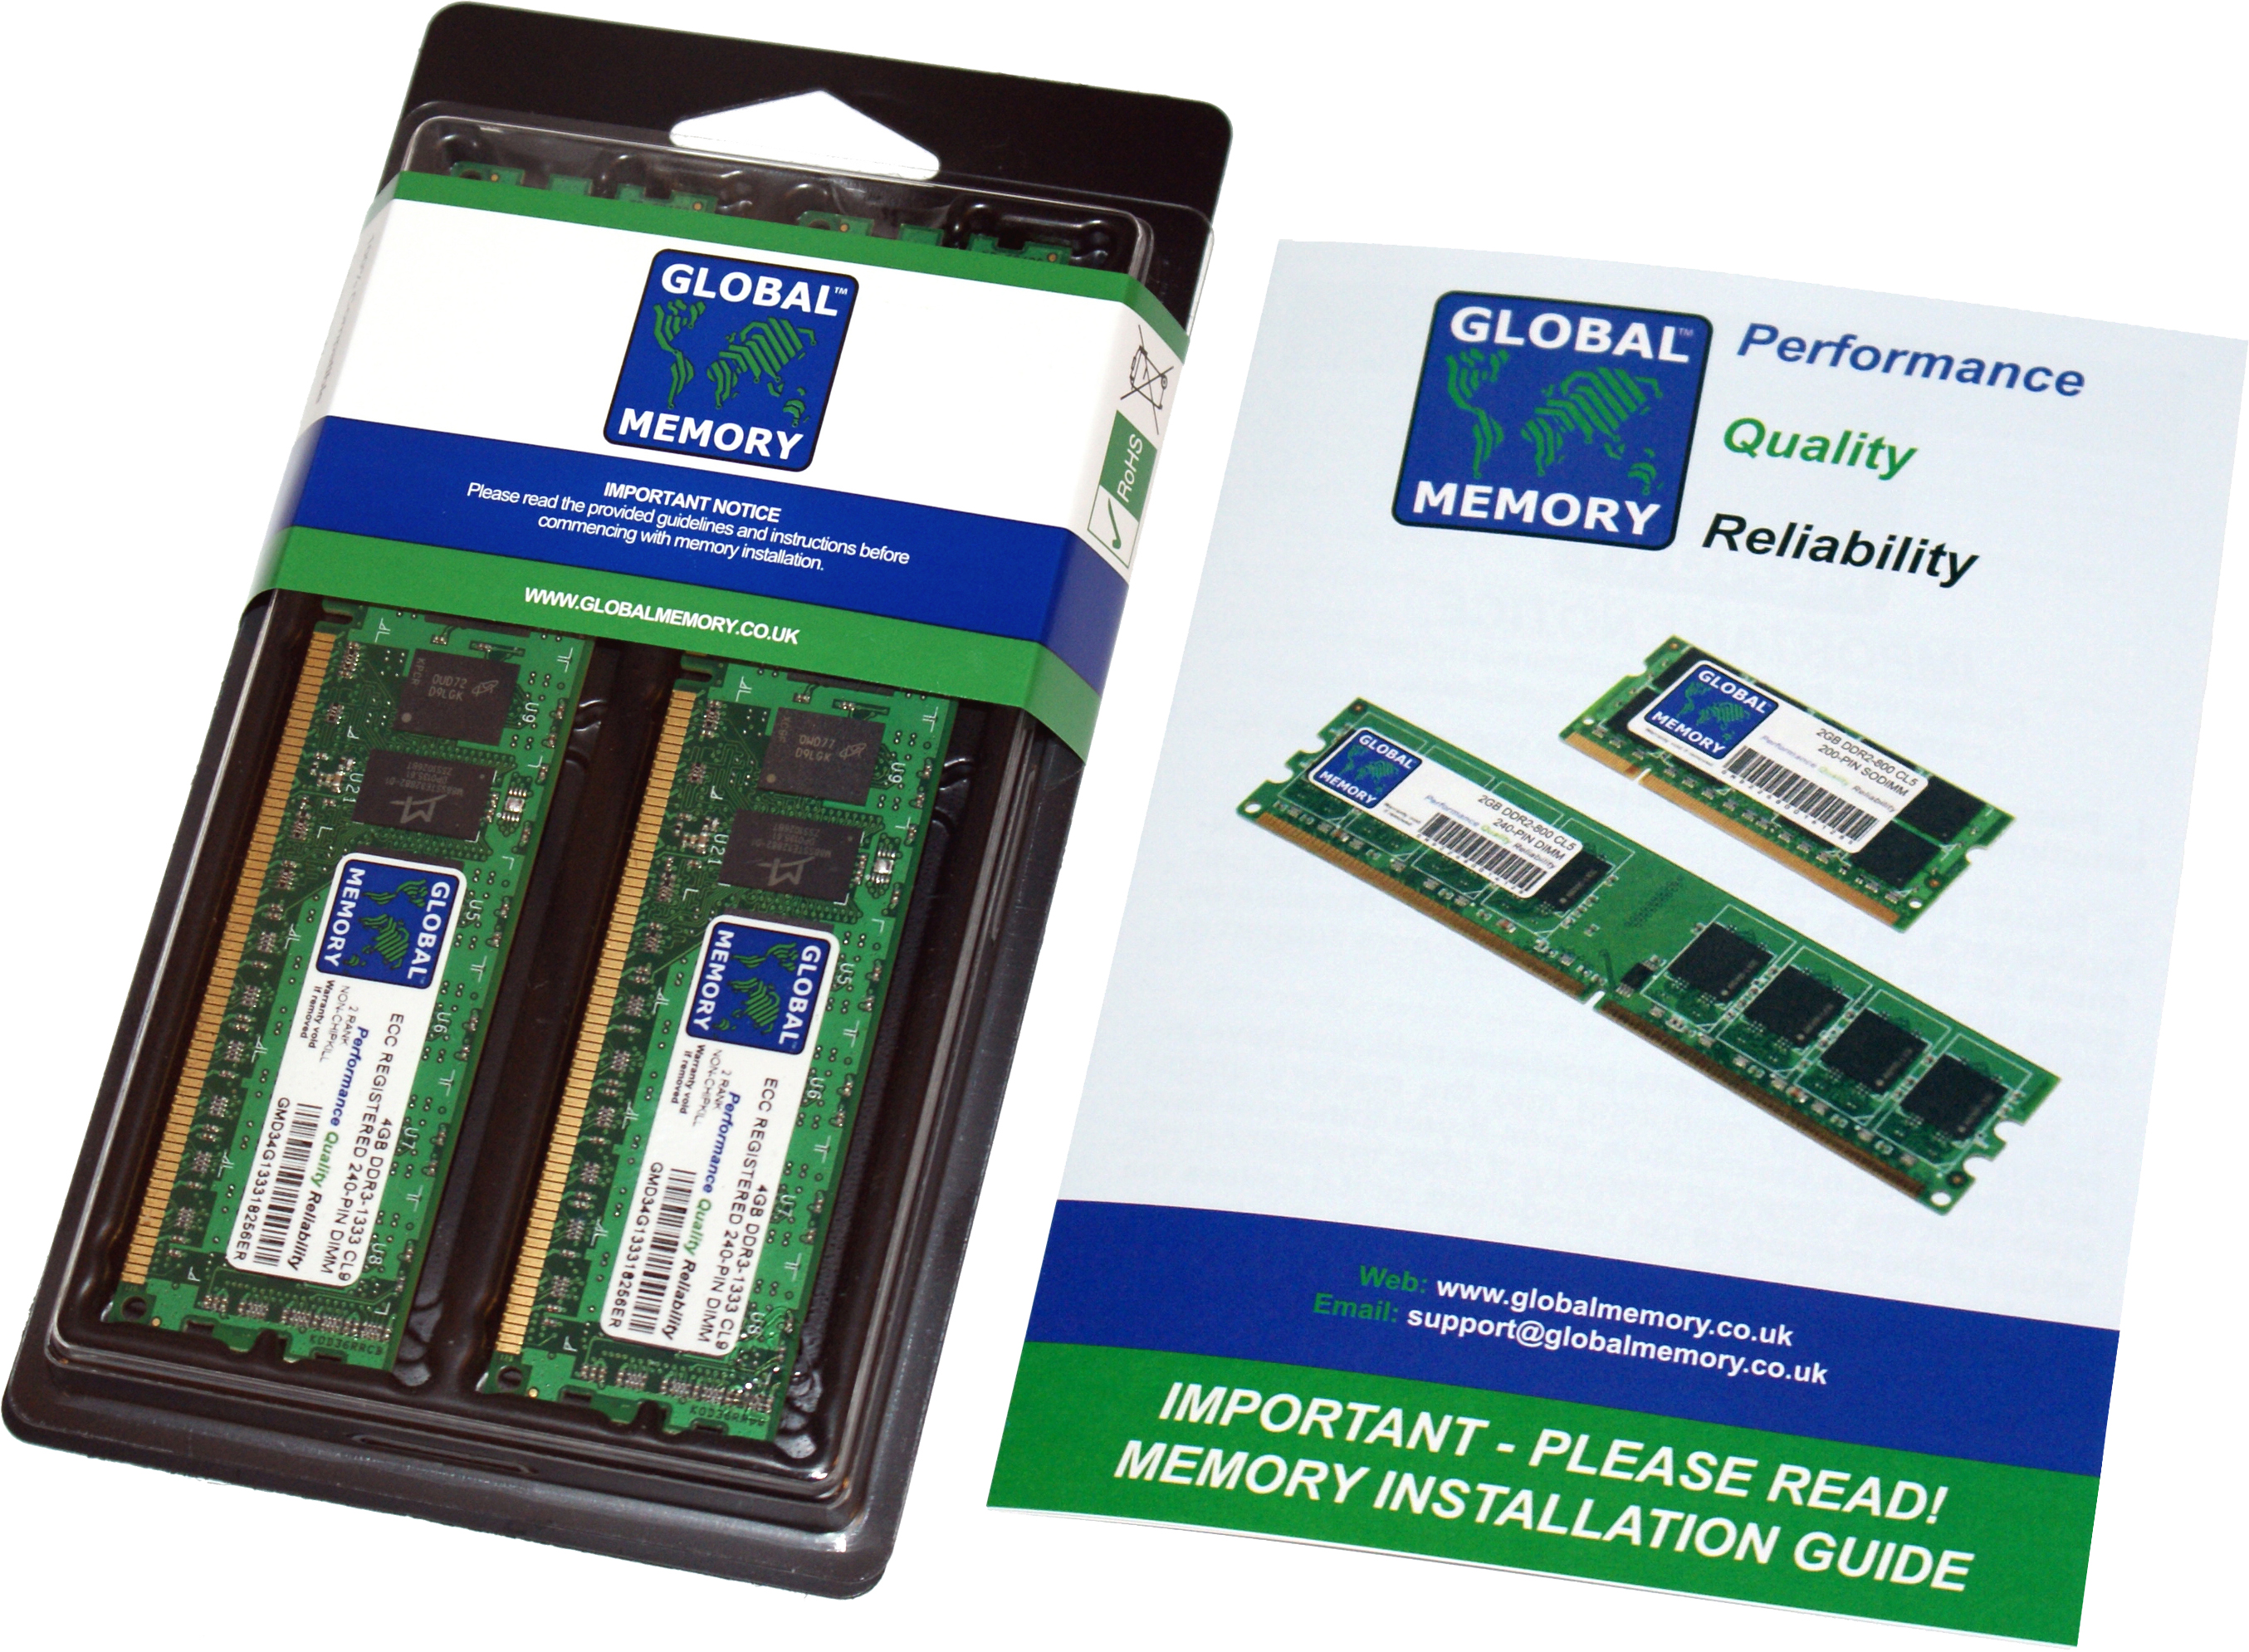 32GB (4 x 8GB) DDR4 3200MHz PC4-25600 288-PIN ECC REGISTERED DIMM (RDIMM) MEMORY RAM KIT FOR SERVERS/WORKSTATIONS/MOTHERBOARDS (4 RANK KIT CHIPKILL)